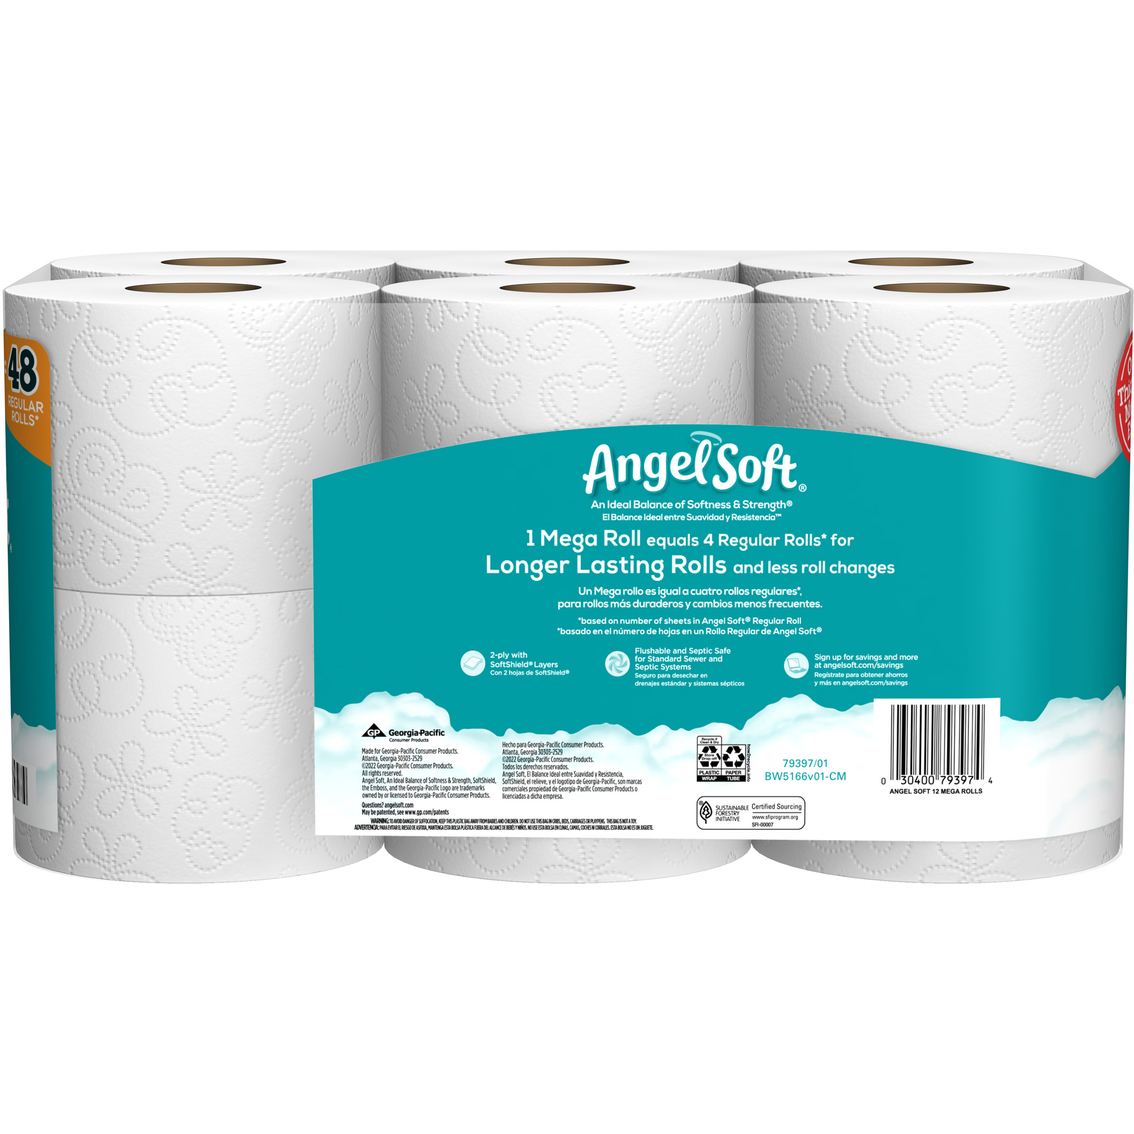 Angel Soft Toilet Paper, Mega Roll 12 pk. - Image 2 of 2